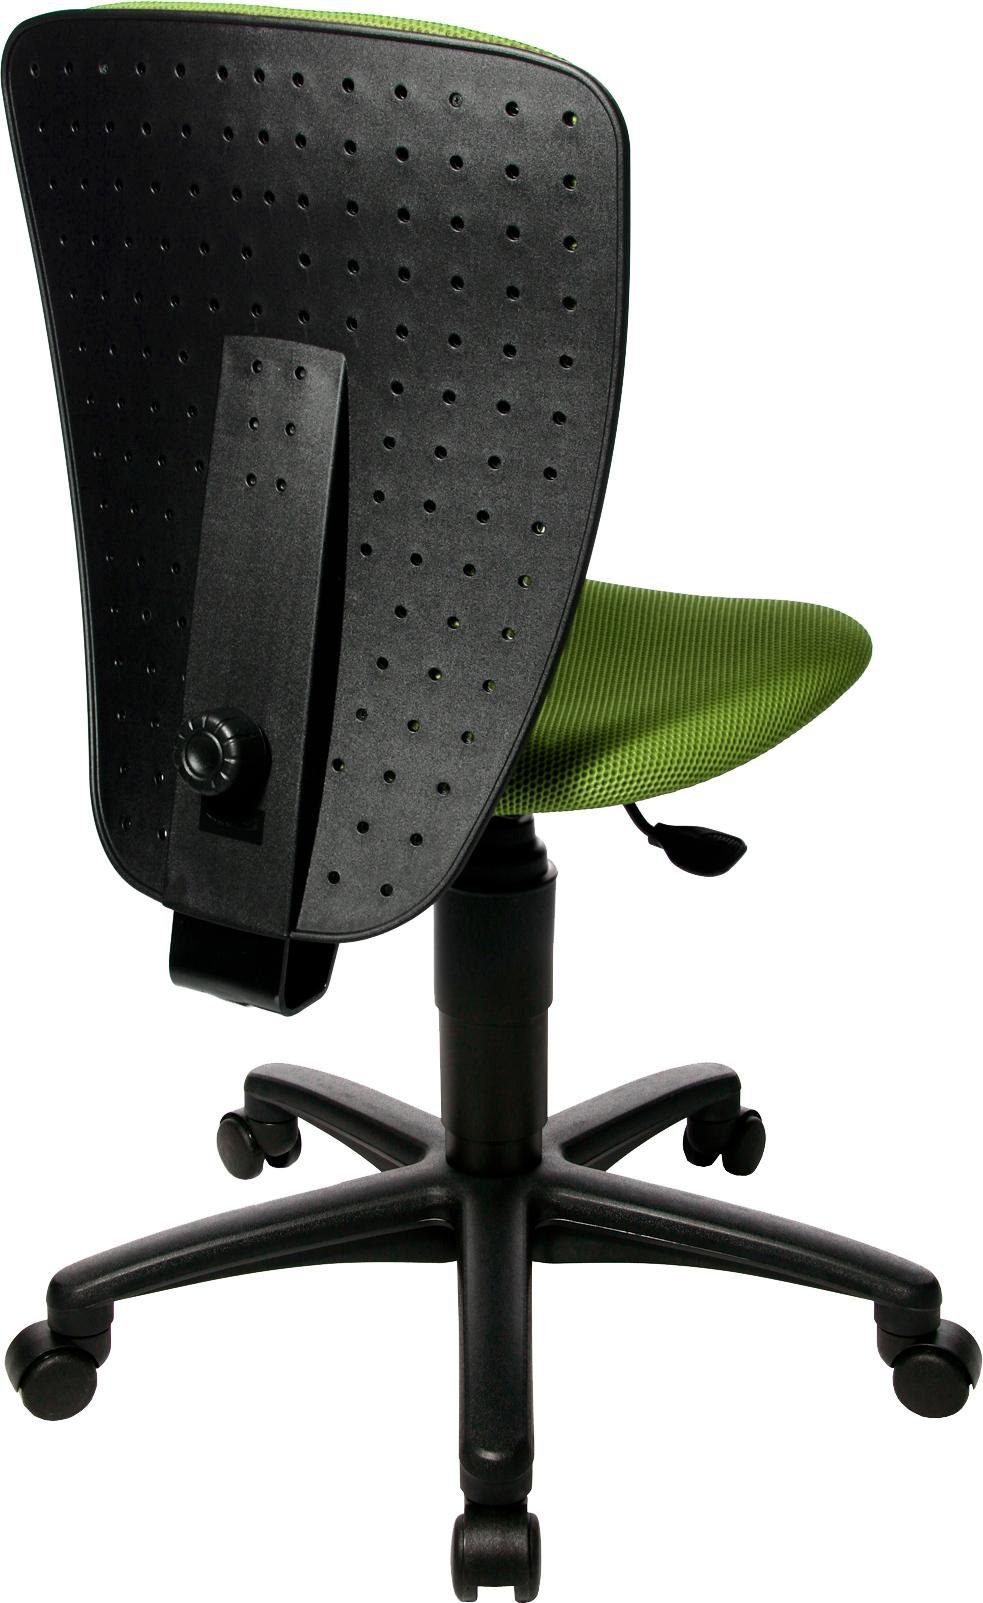 S'cool TOPSTAR grün-schwarz Bürostuhl High